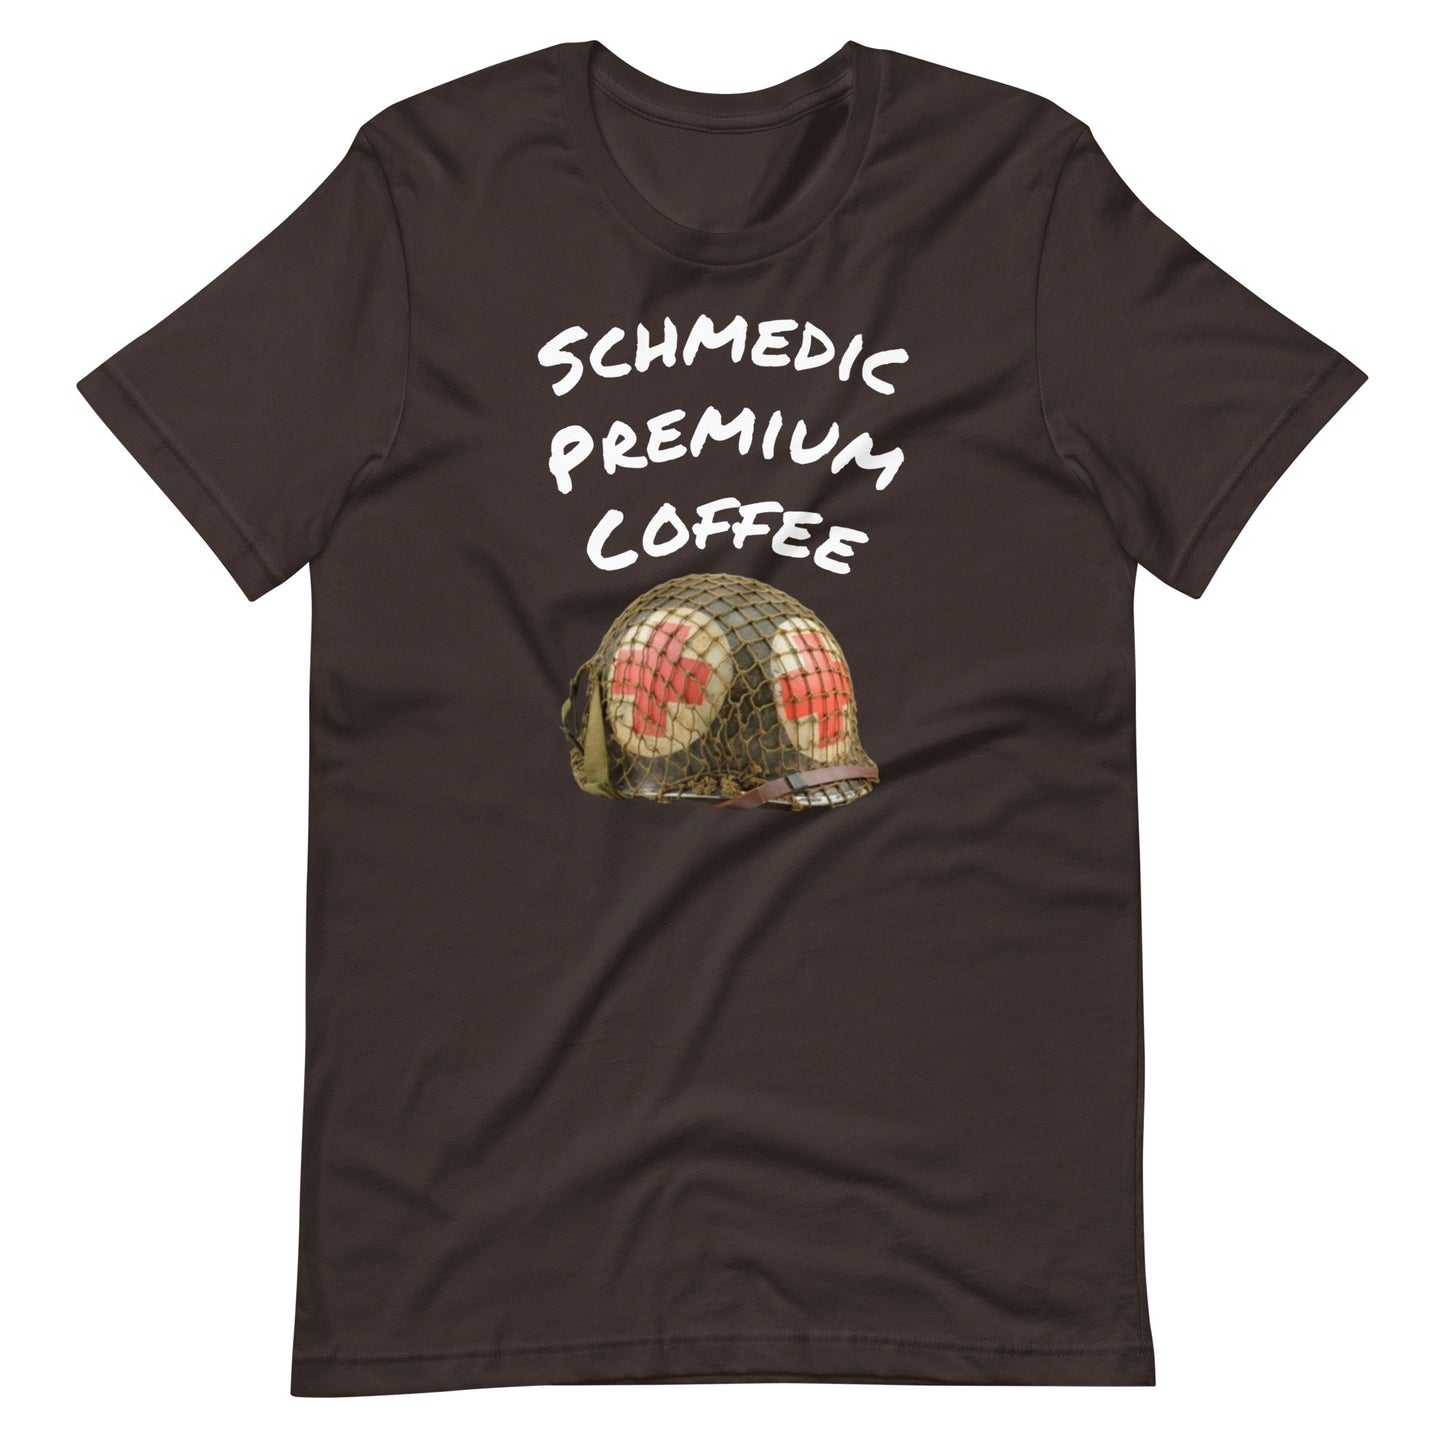 Schmedic Premium Coffee (white lettering) Unisex t-shirt